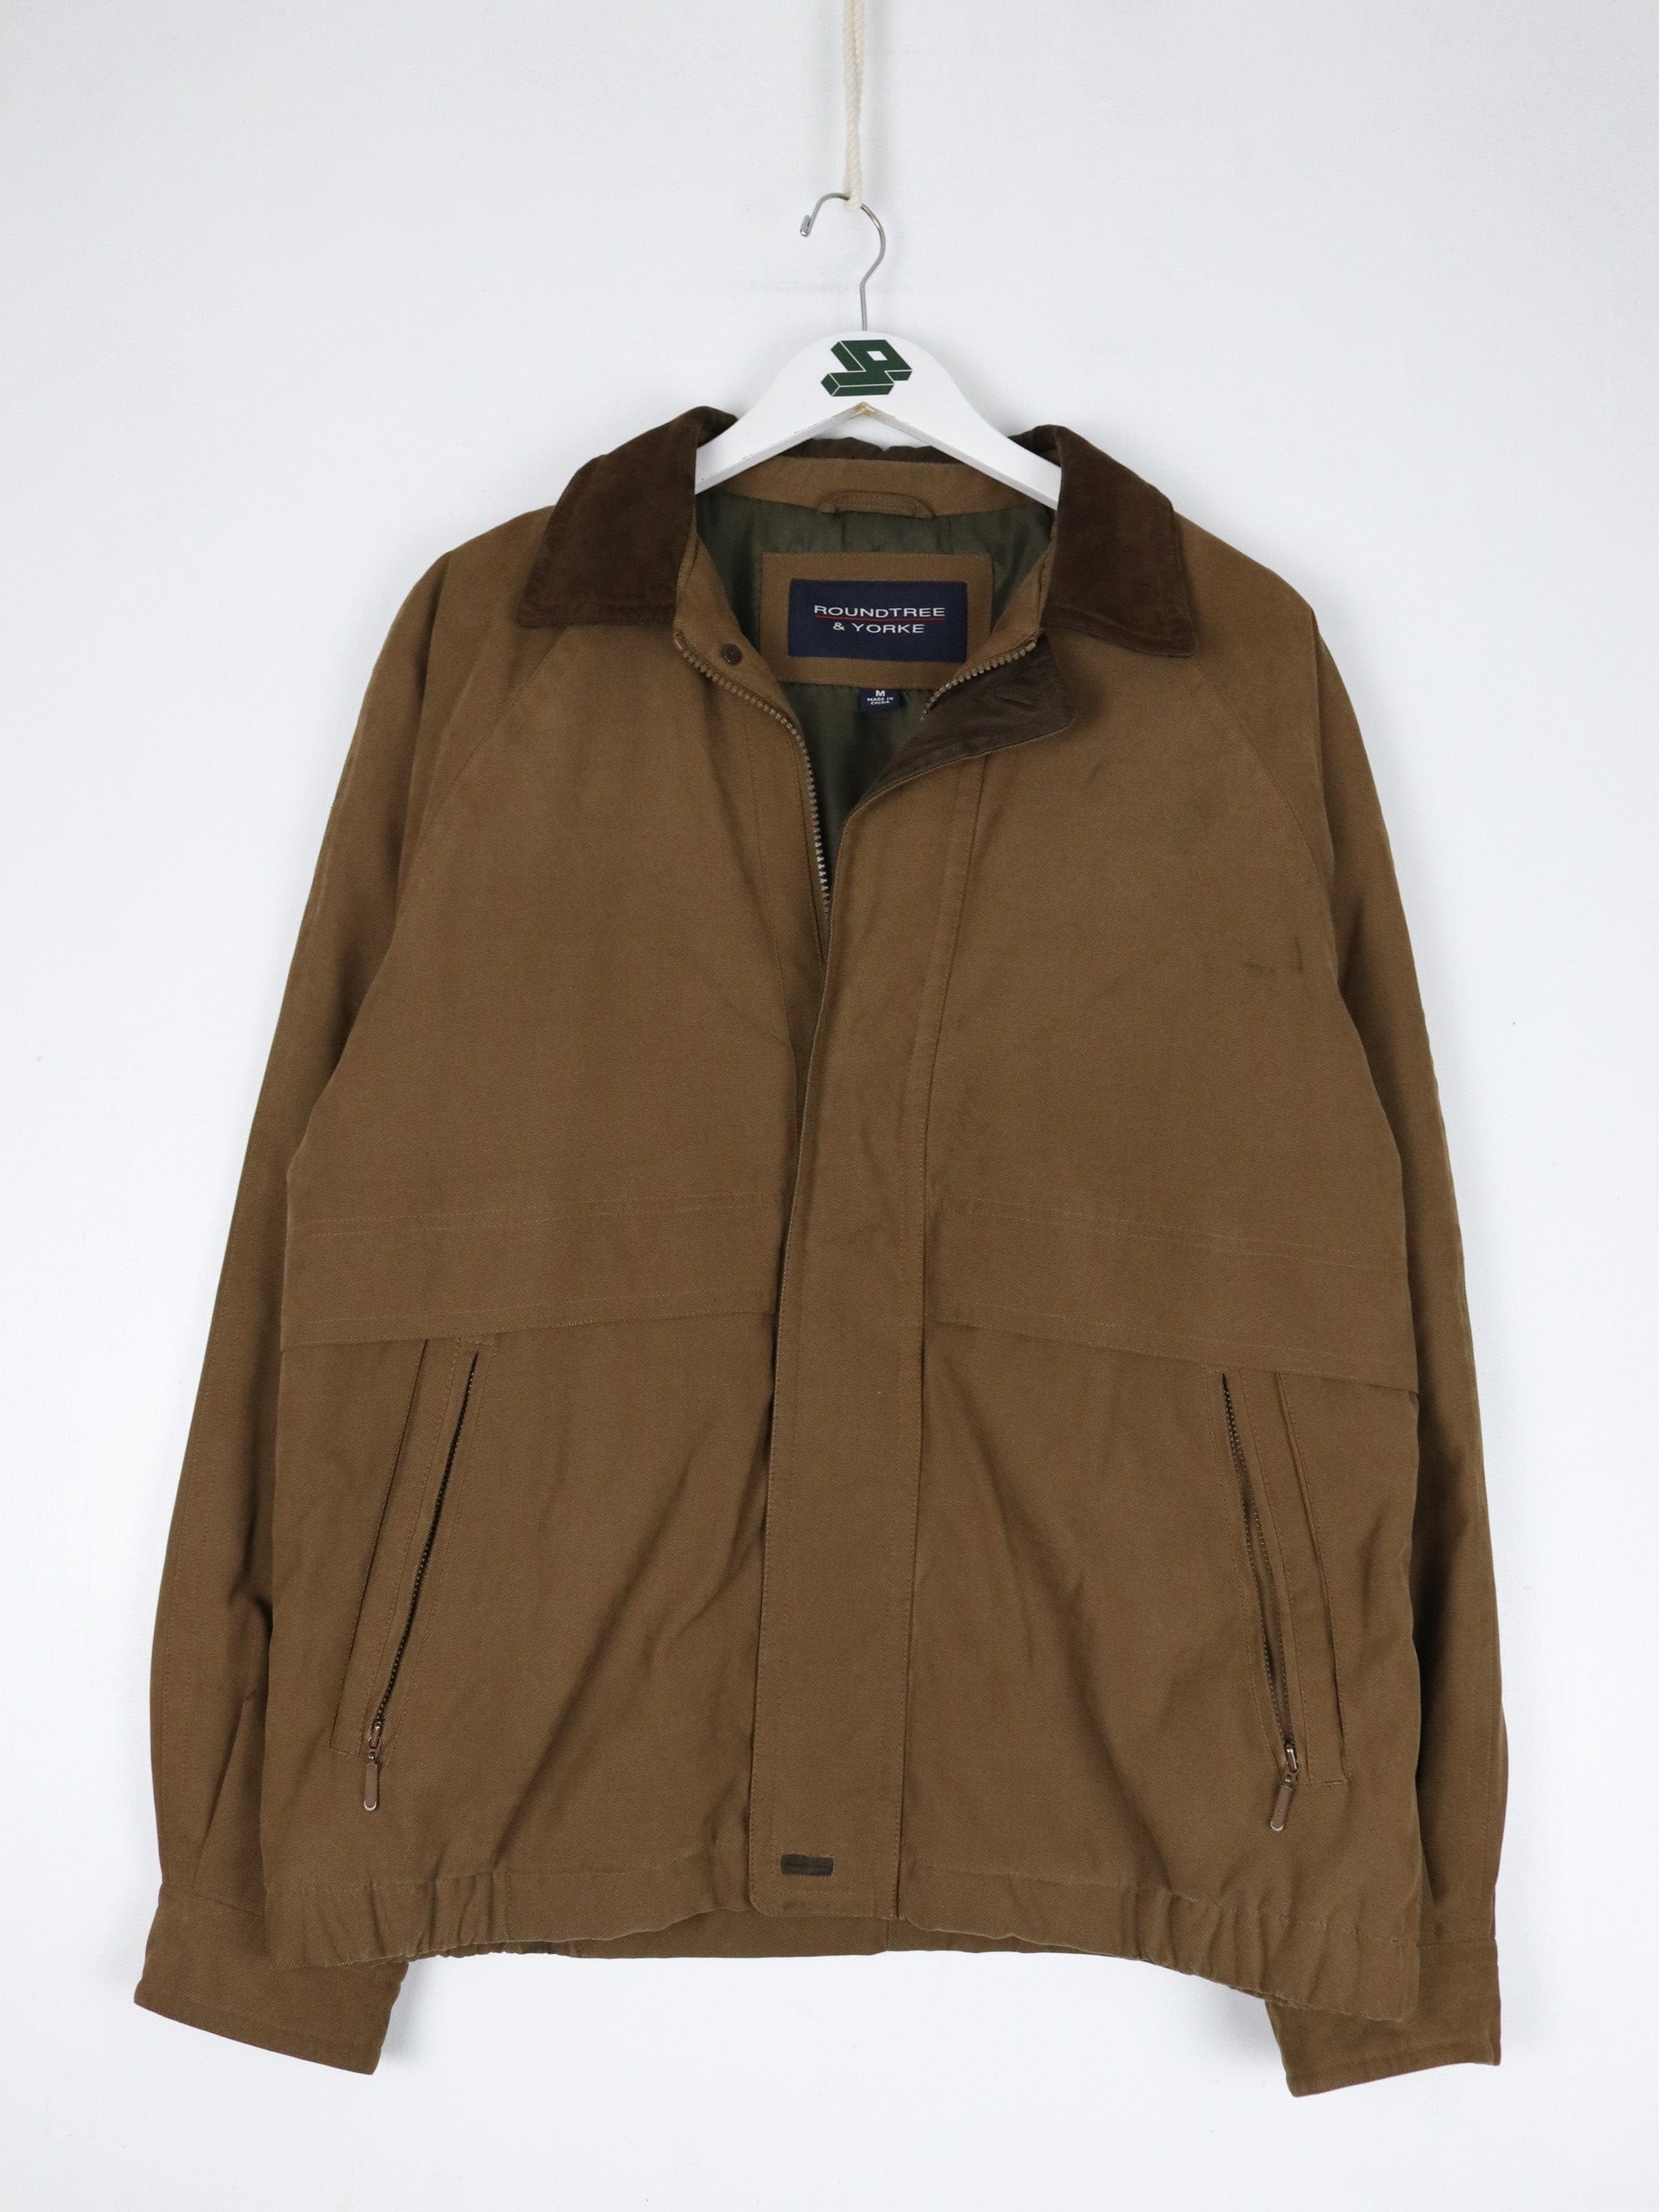 Roundtree & Yorke Jacket Mens Medium Brown Canvas Coat